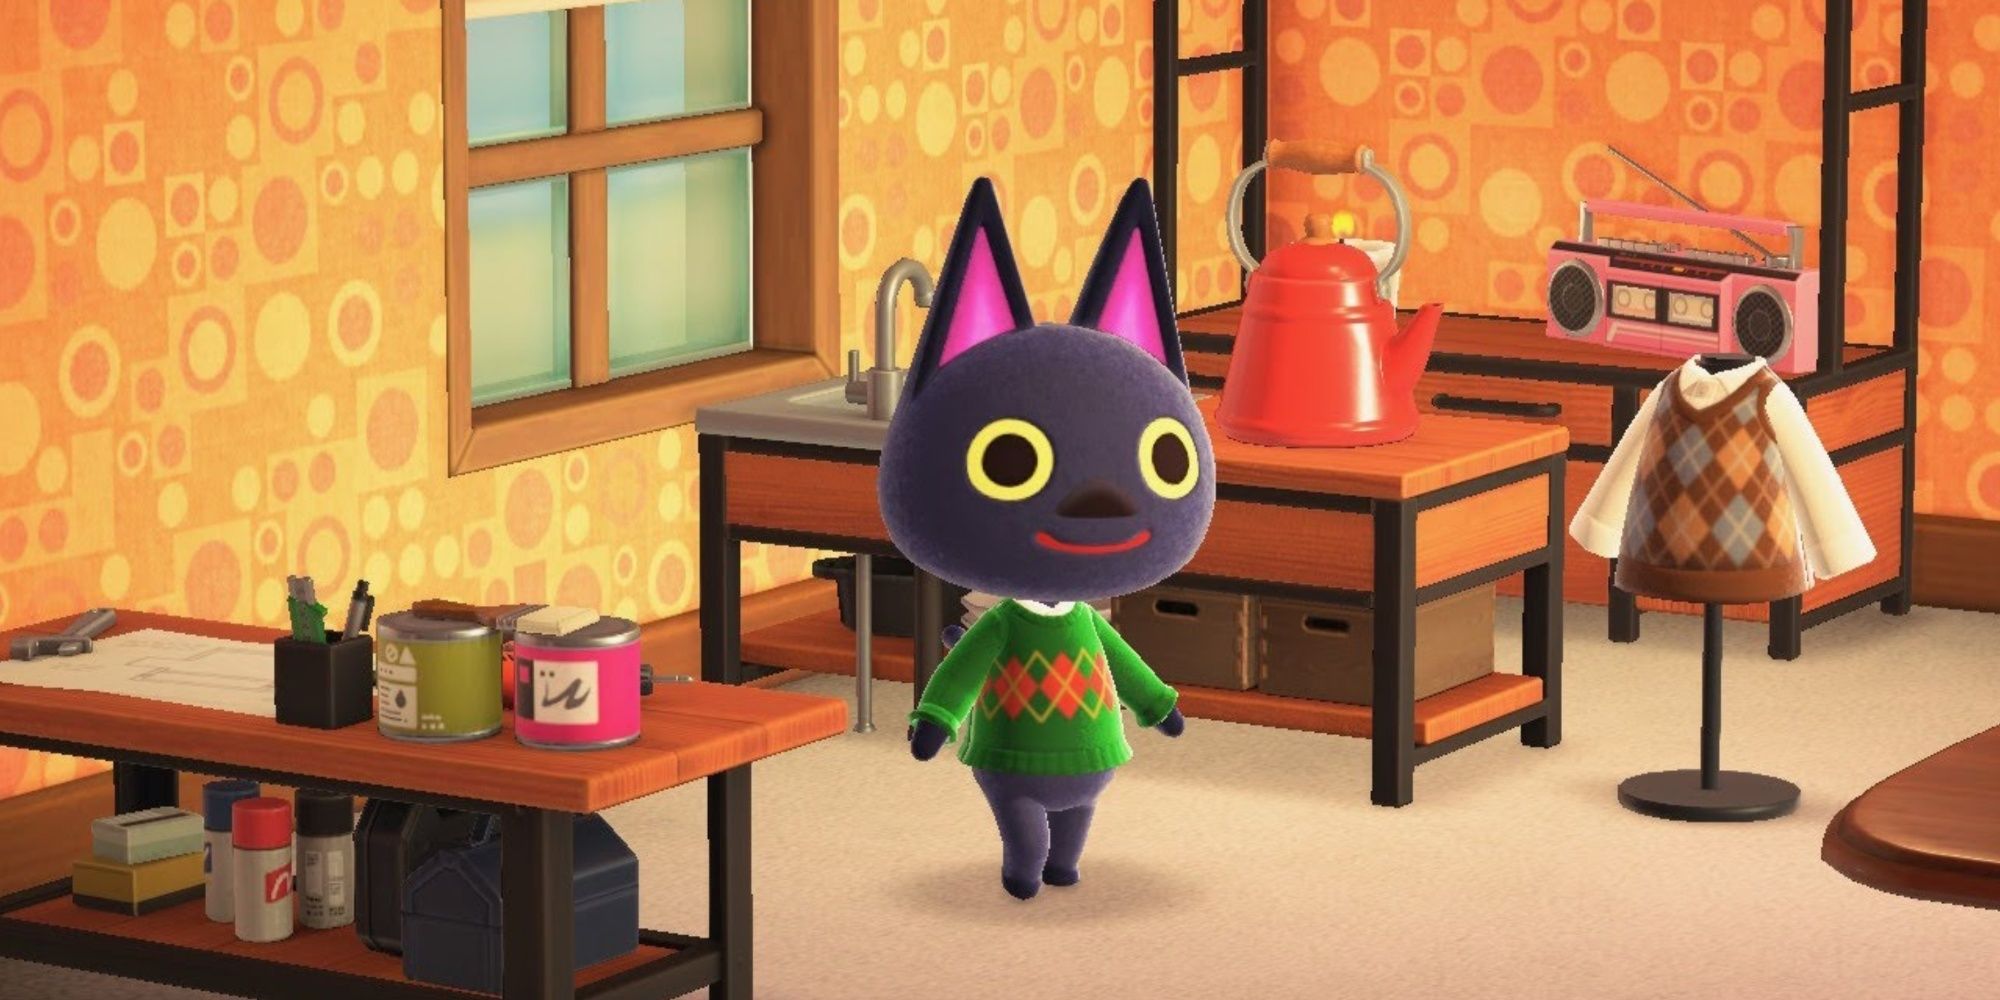 Kiki in her house in Animal Crossing New Horizons